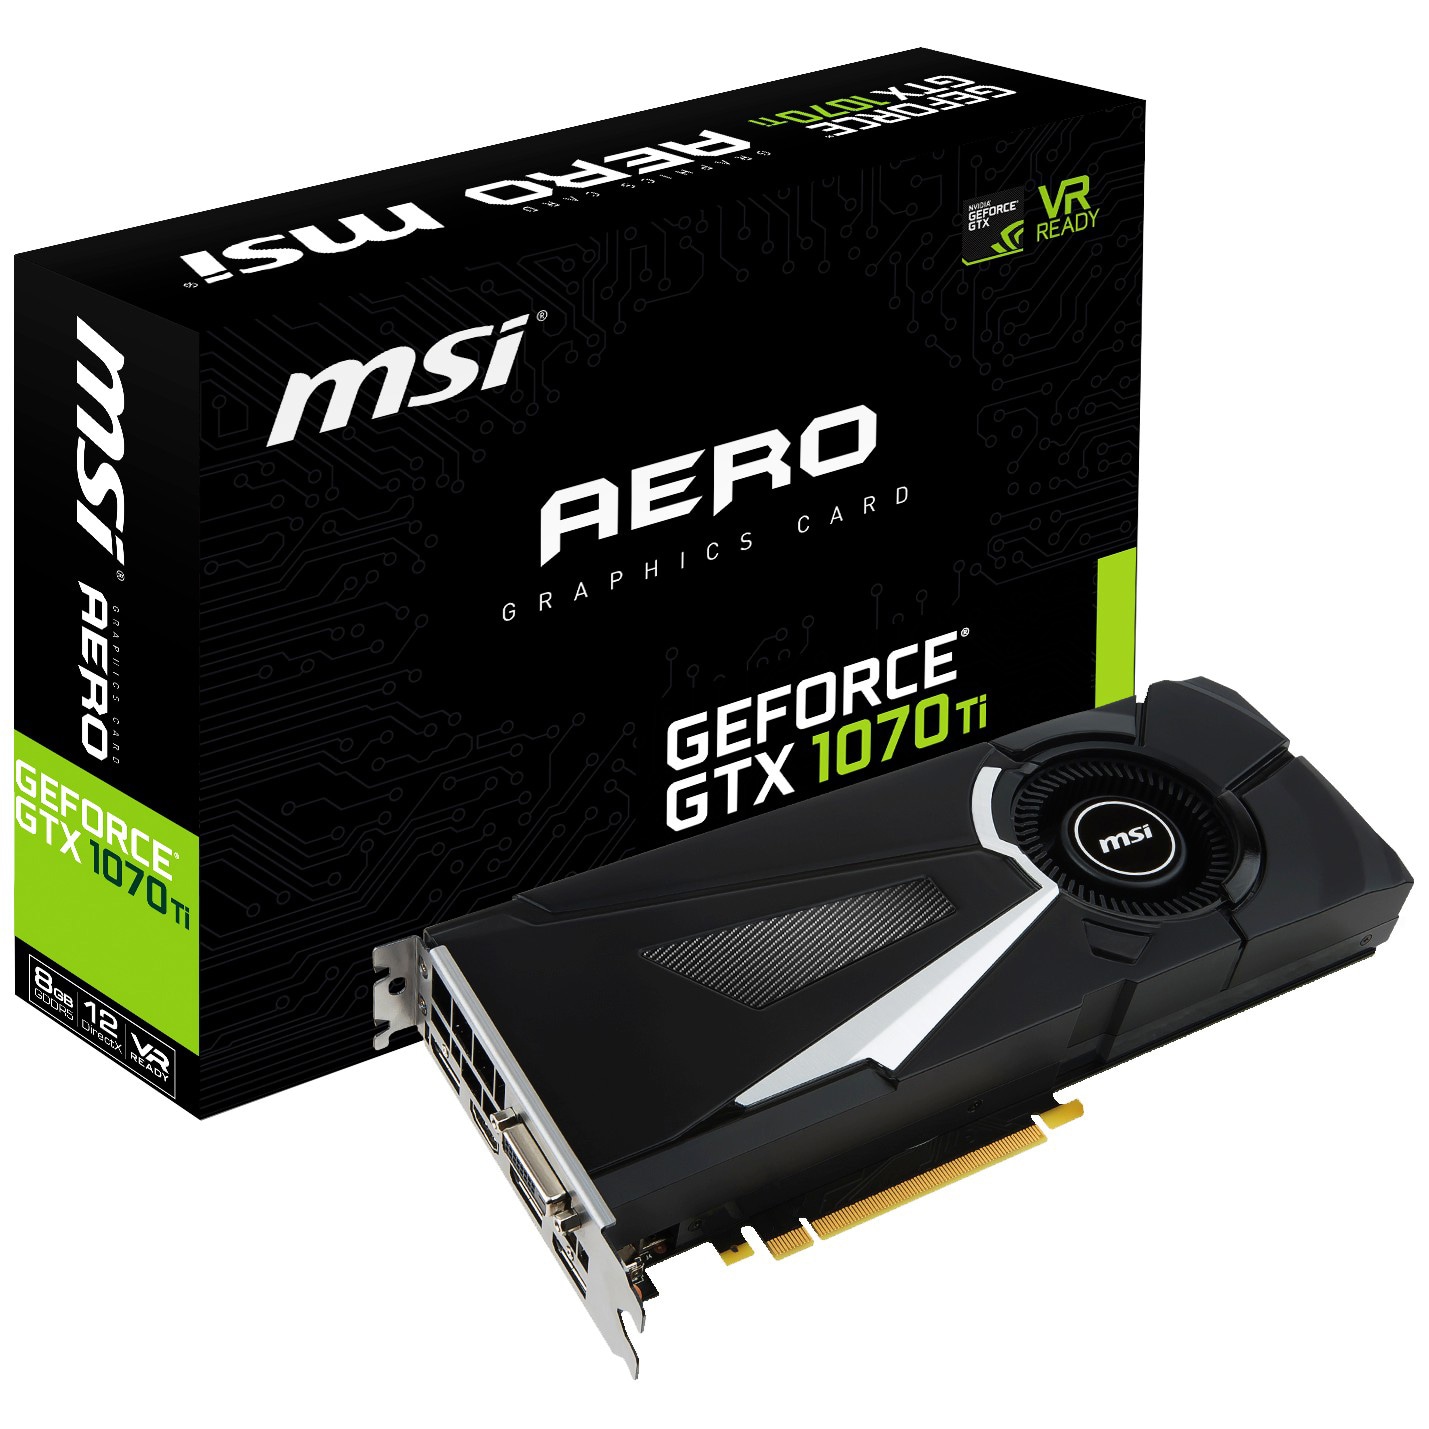 MSI GeForce GTX 1070 Ti Aero grafikkort (8 GB) | Elgiganten